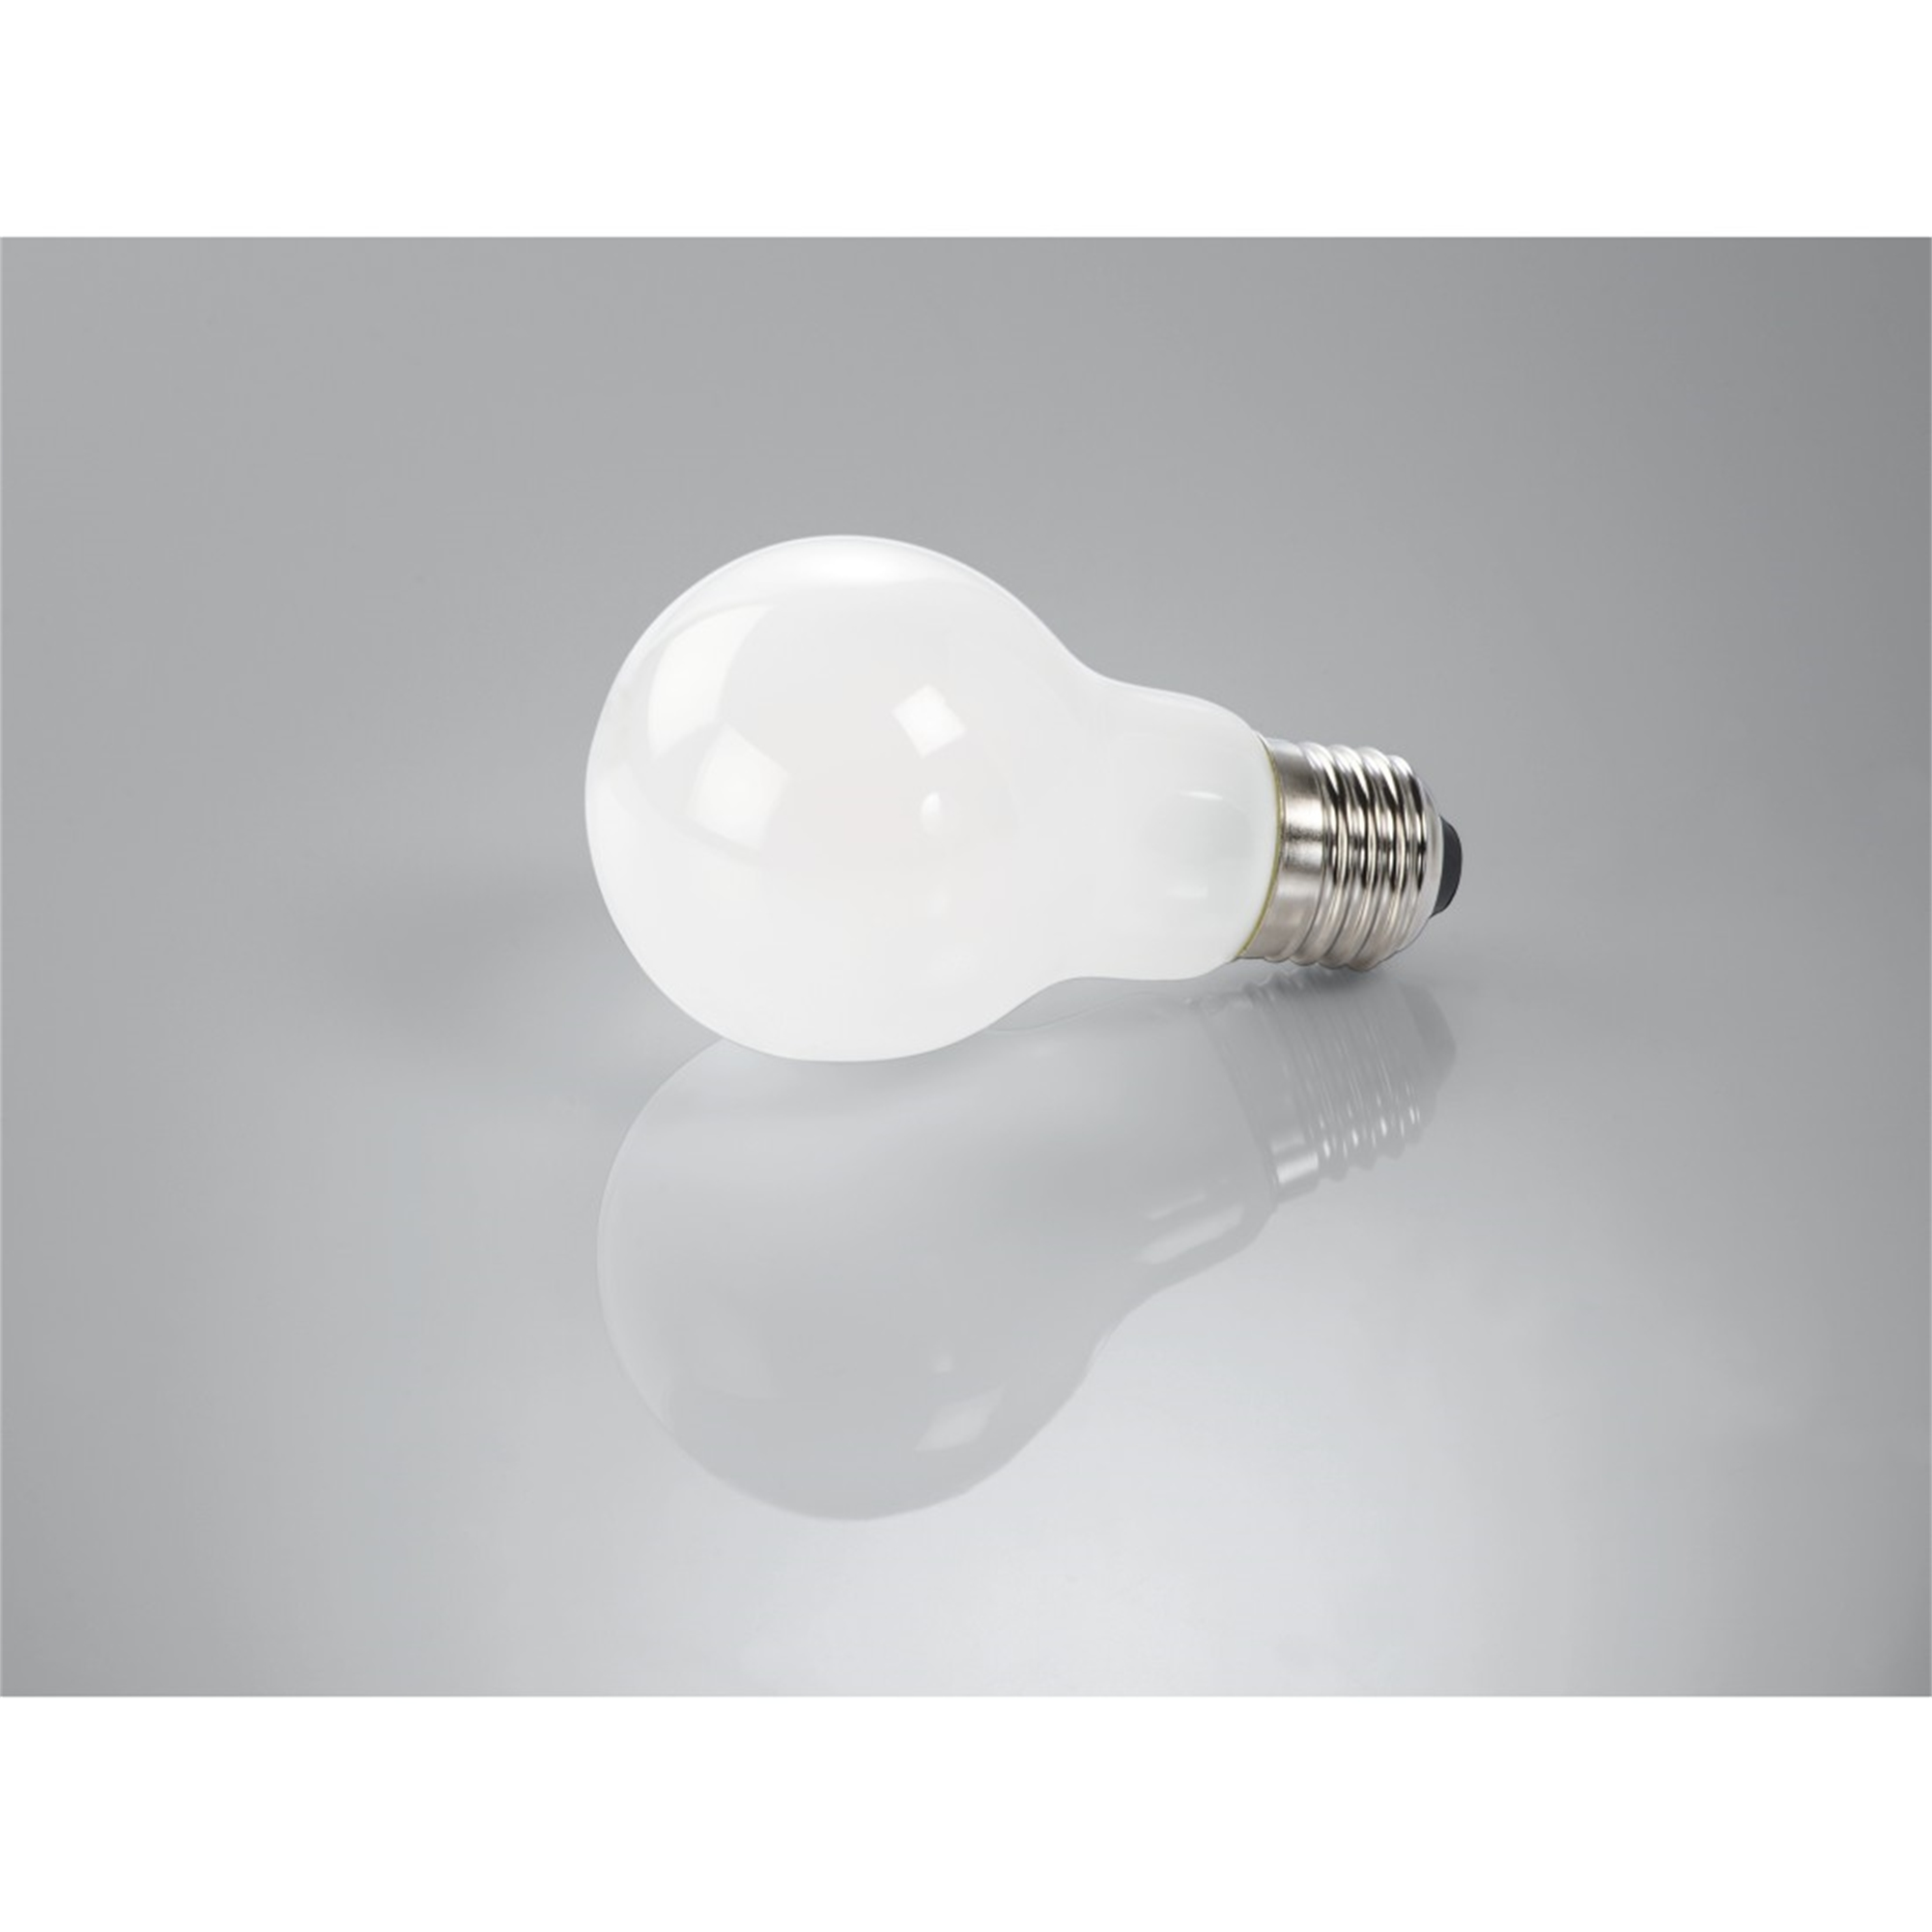 XAVAX E27, 470lm Tageslicht E27 ersetzt 40W LED-Lampe